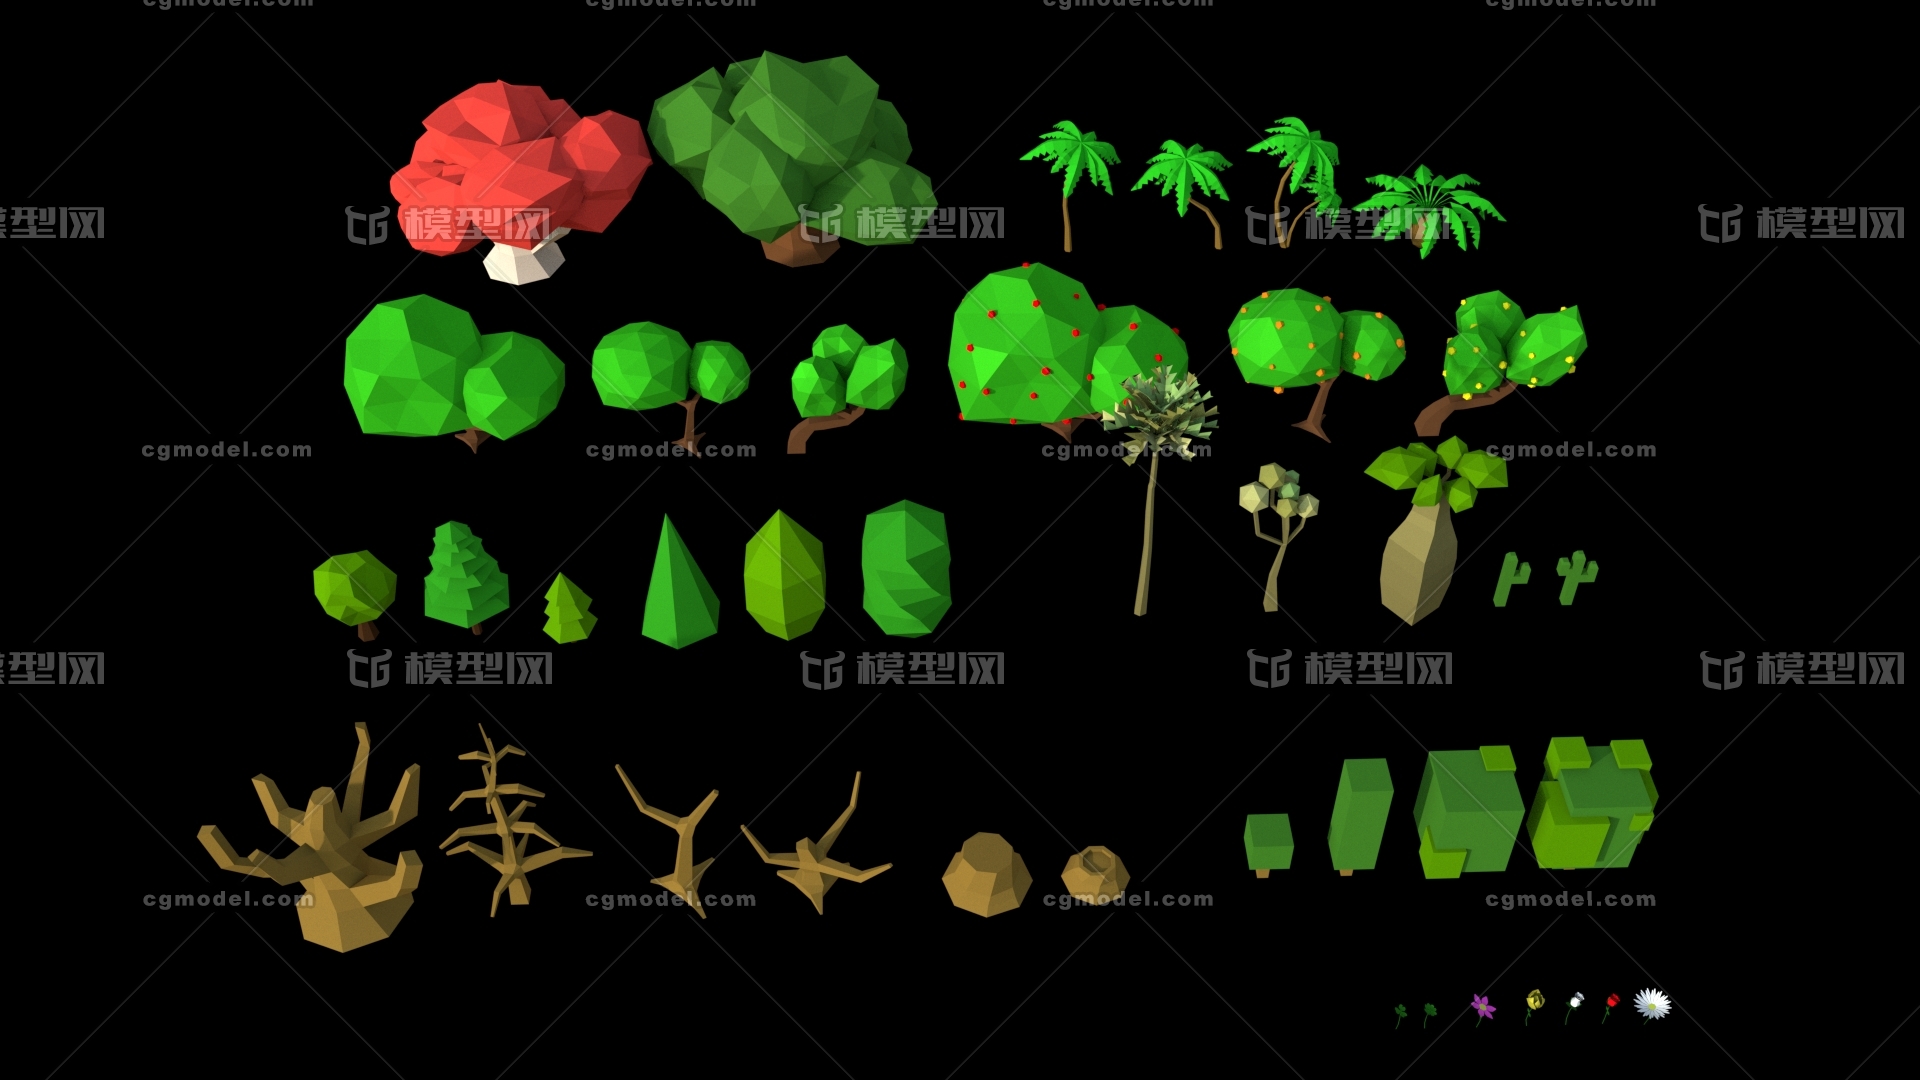 lowpoly 超低模 卡通 树木 植物 组合 共计40种 随意组合适合 游戏